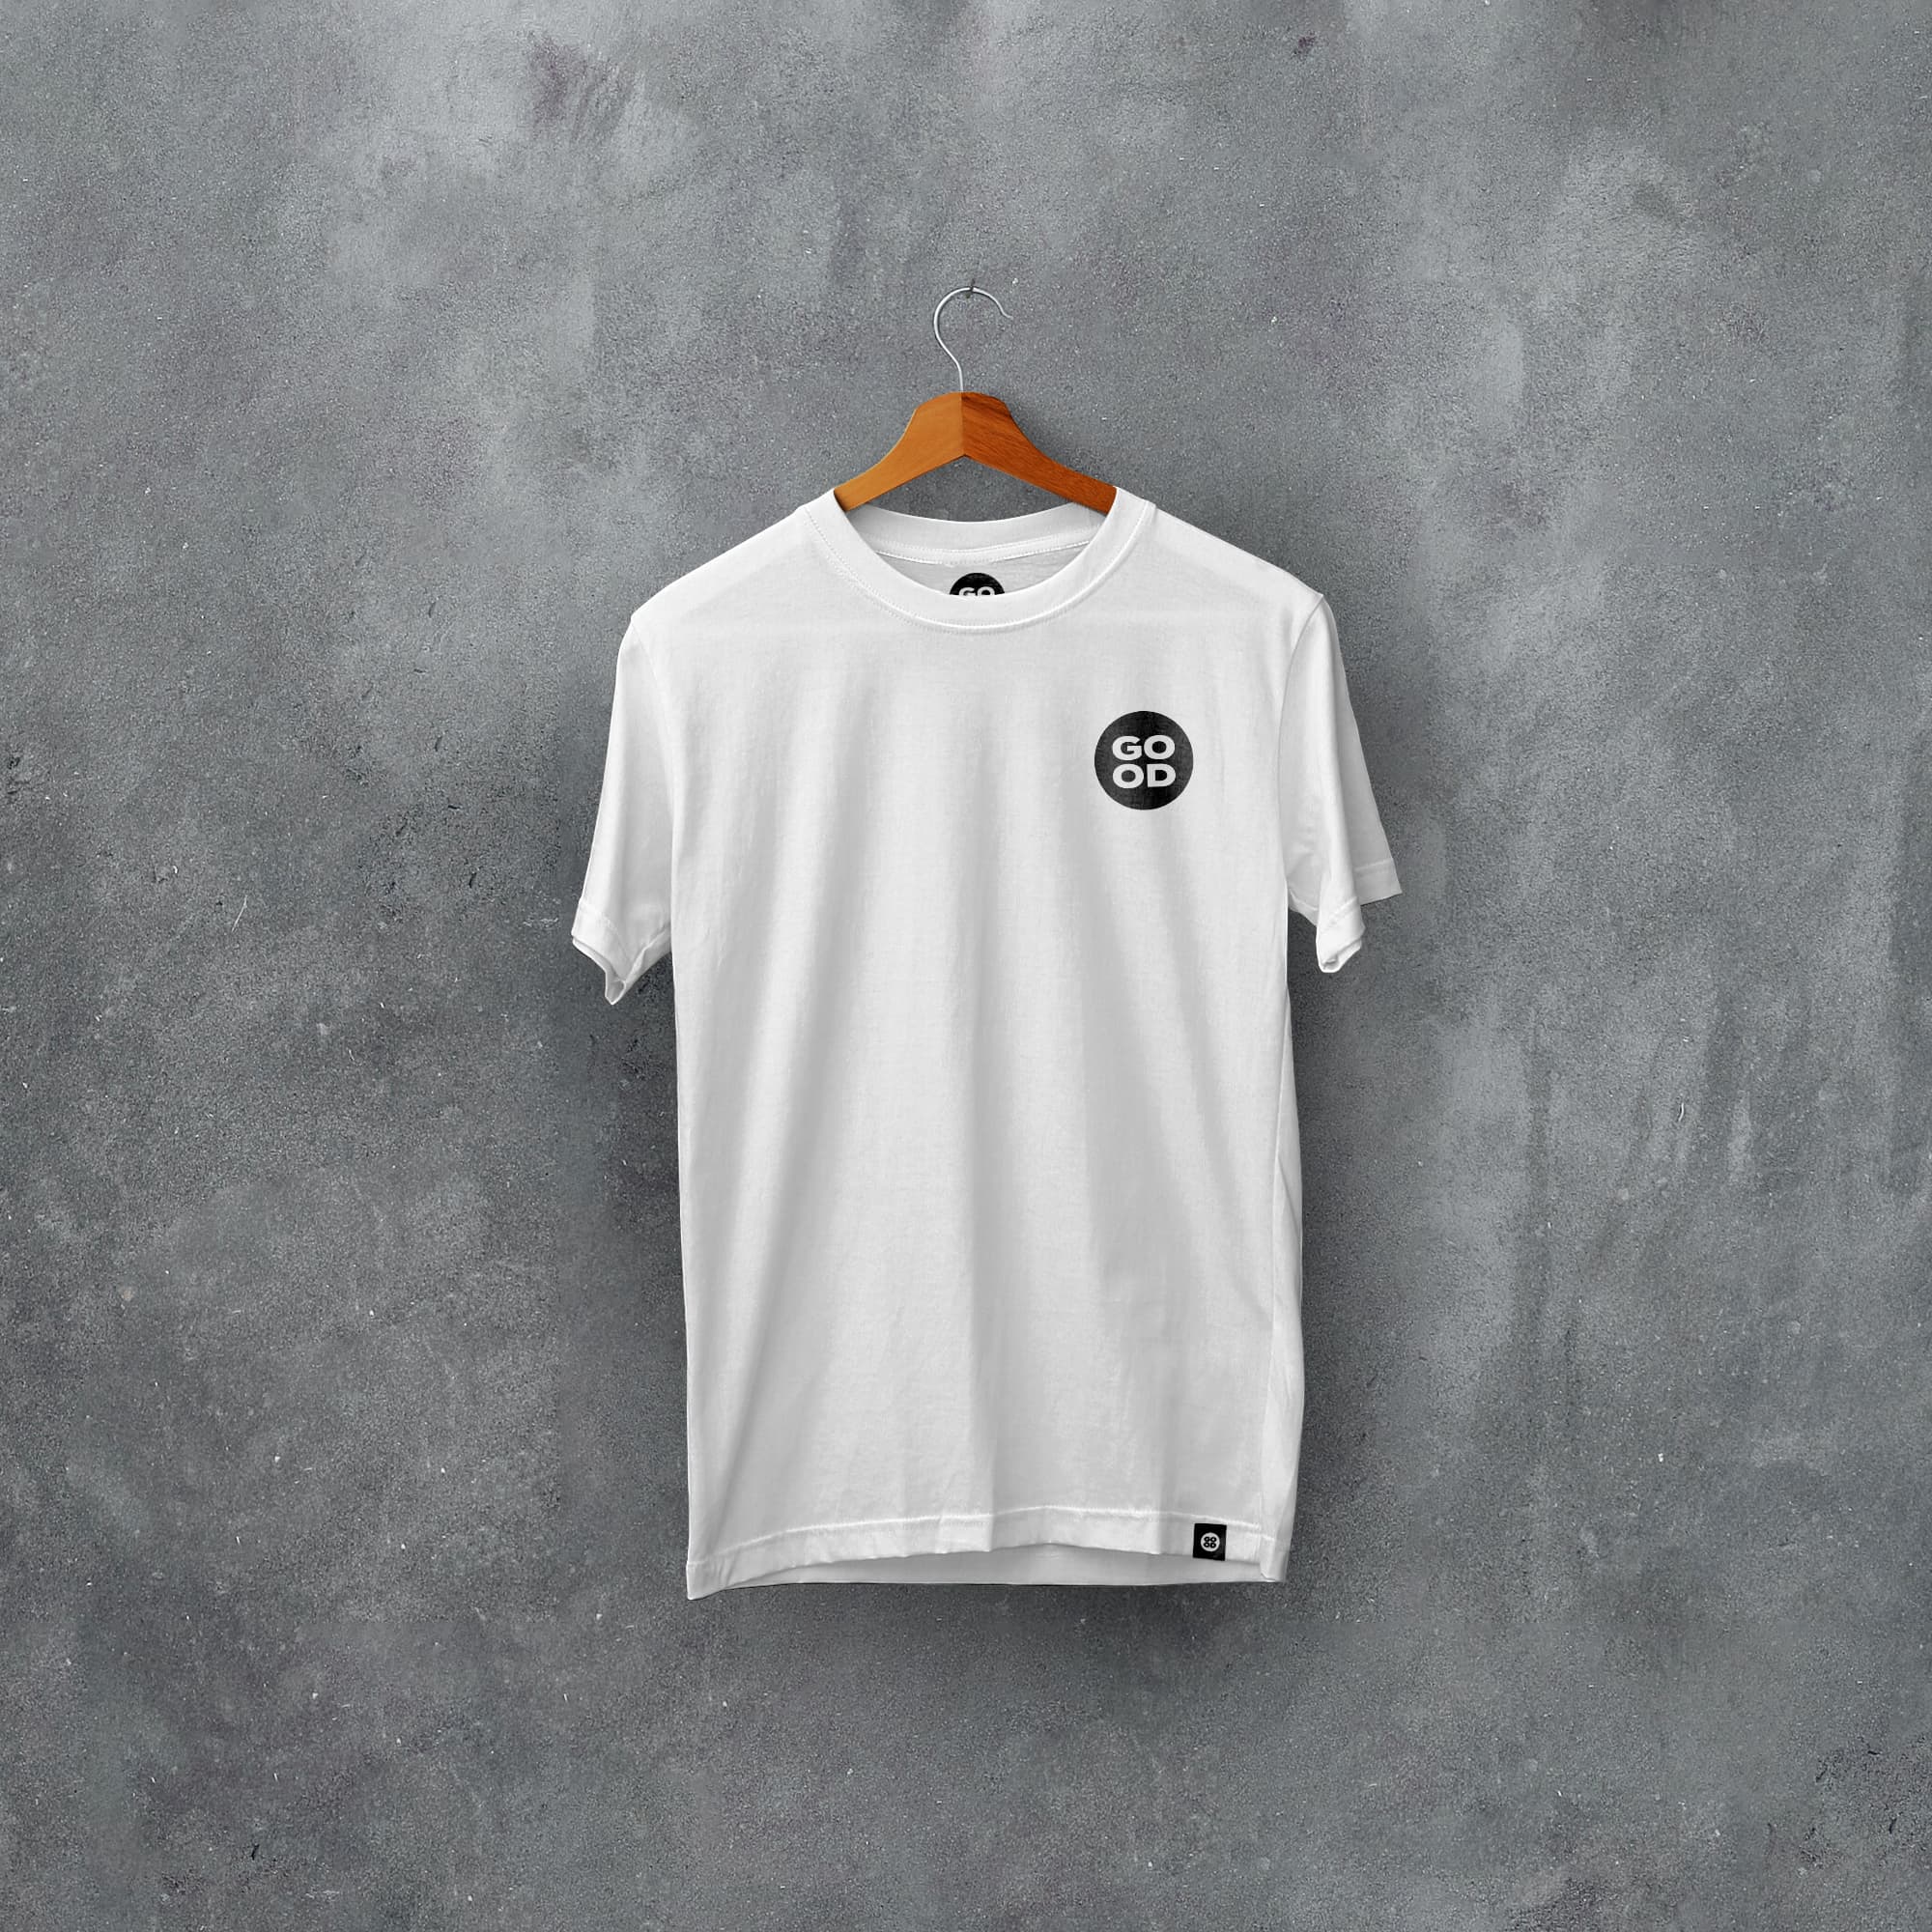 Airdrie Classic Kits Football T-Shirt